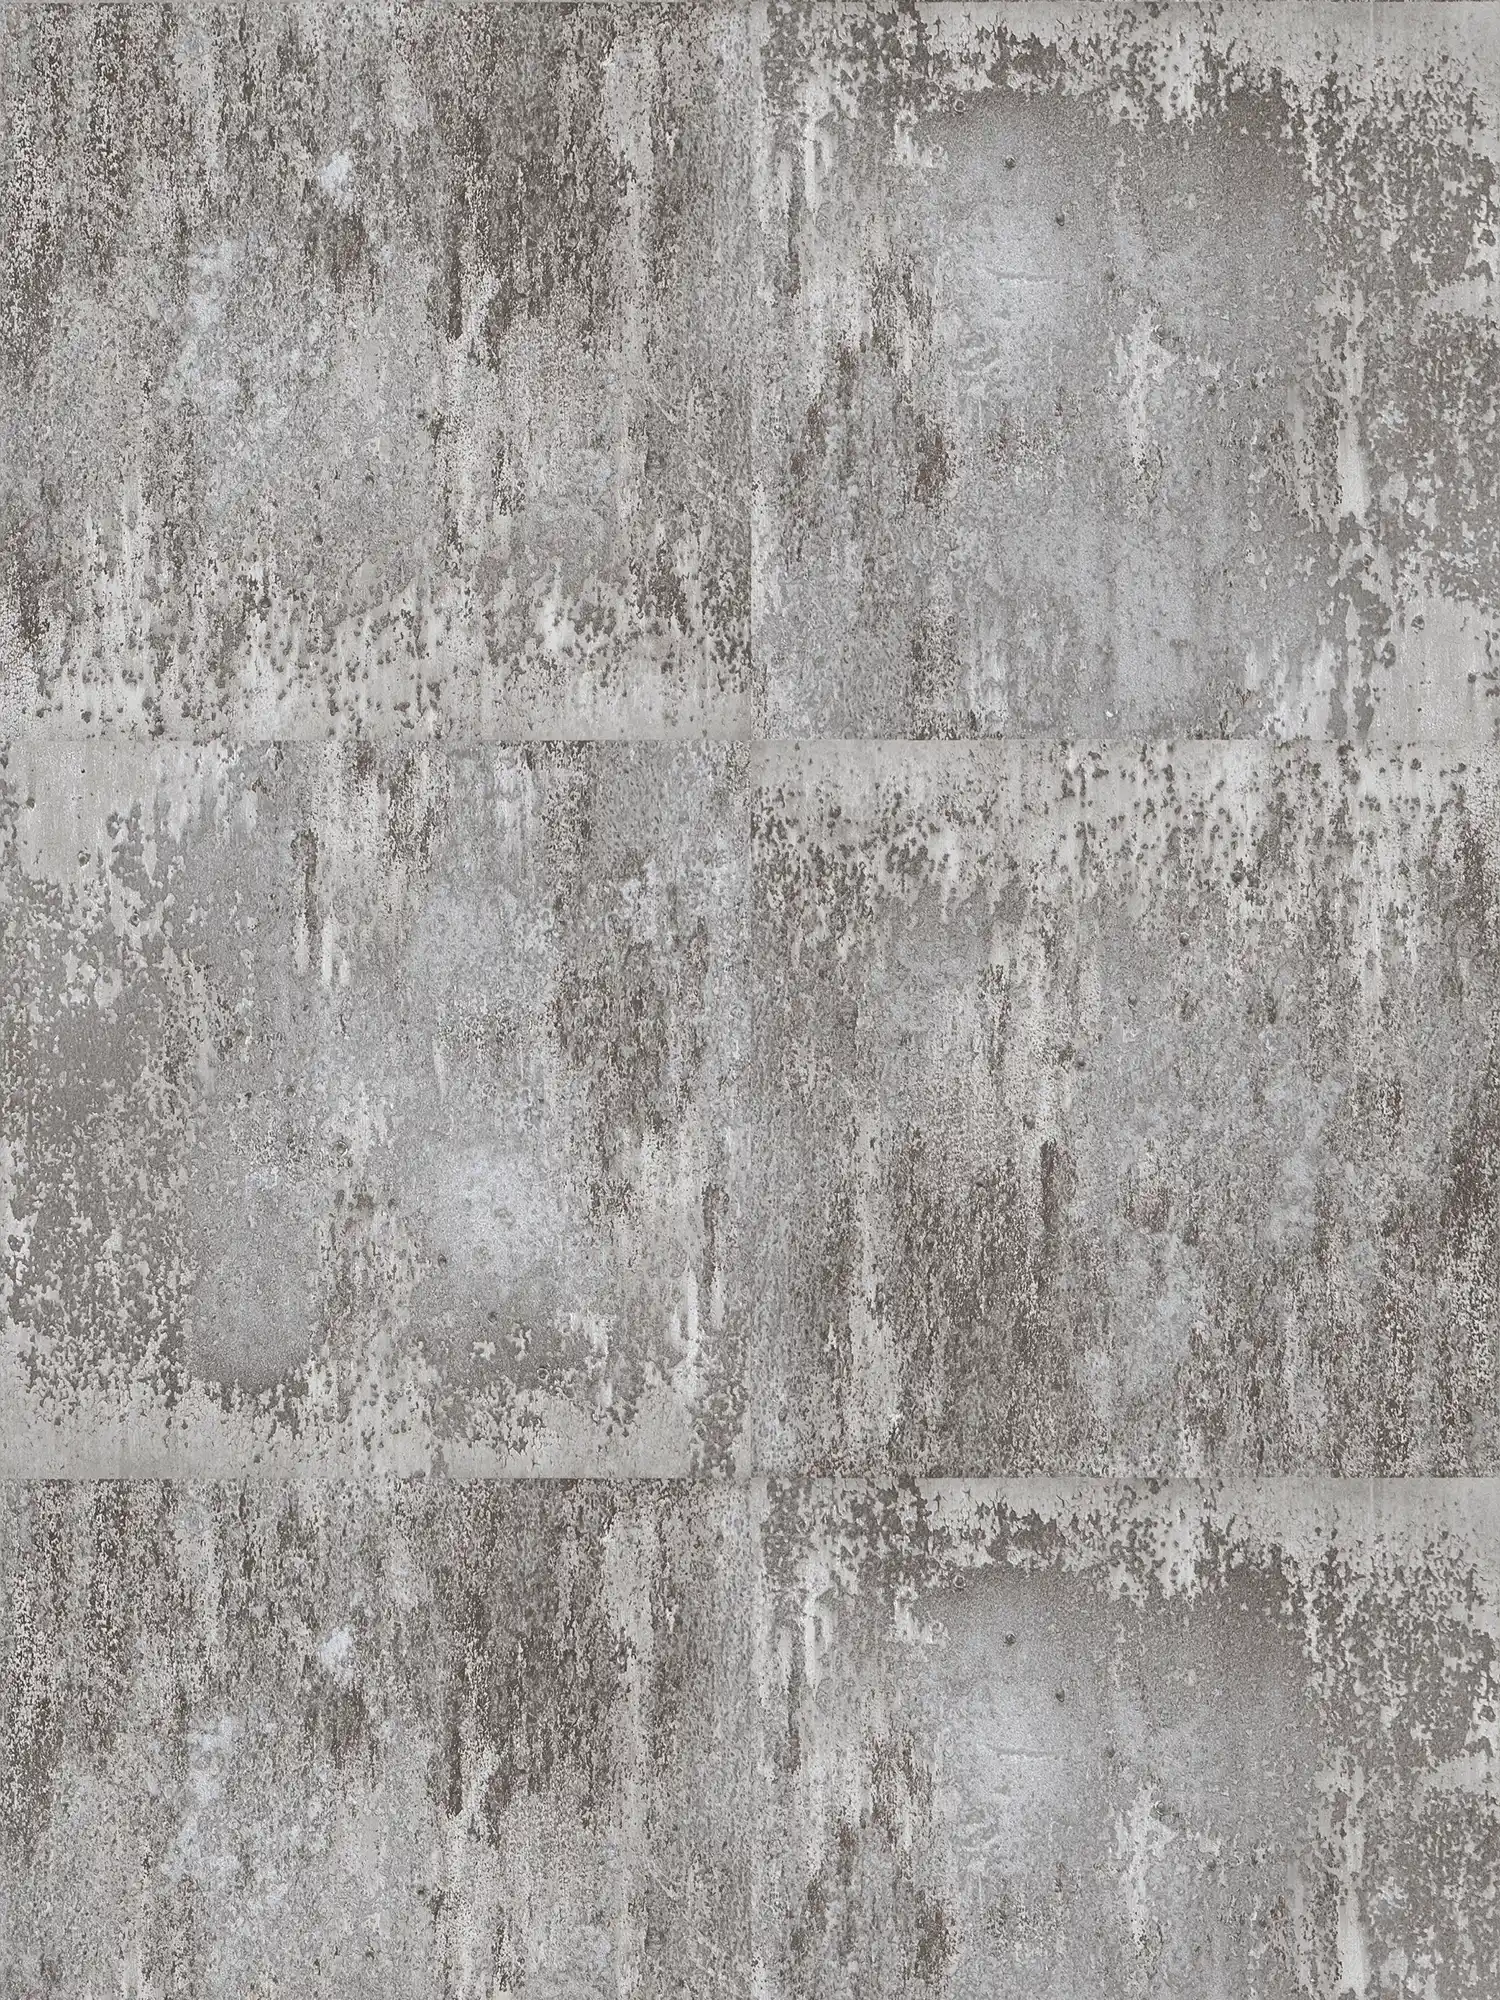 Selbstklebende Tapete | Rostoptik Design mit Metallic Effekt – Grau
